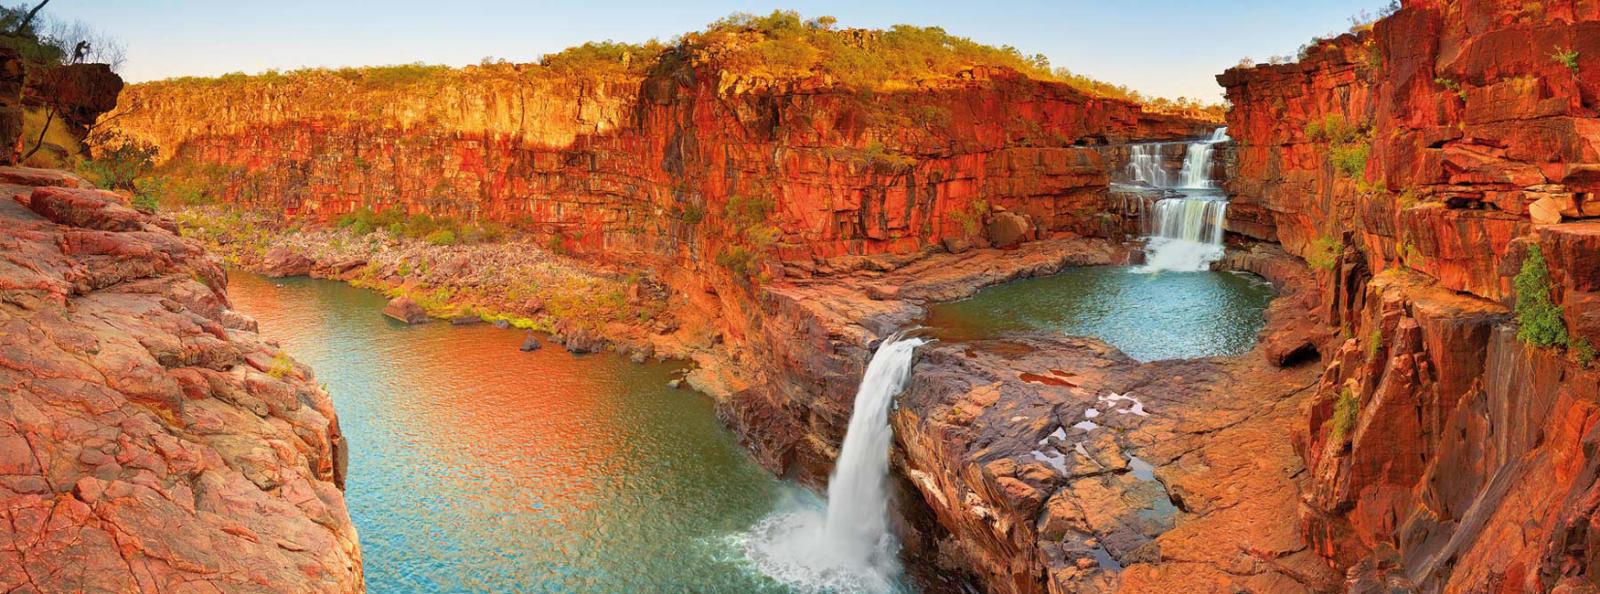 Kimberly Western Australia Outback